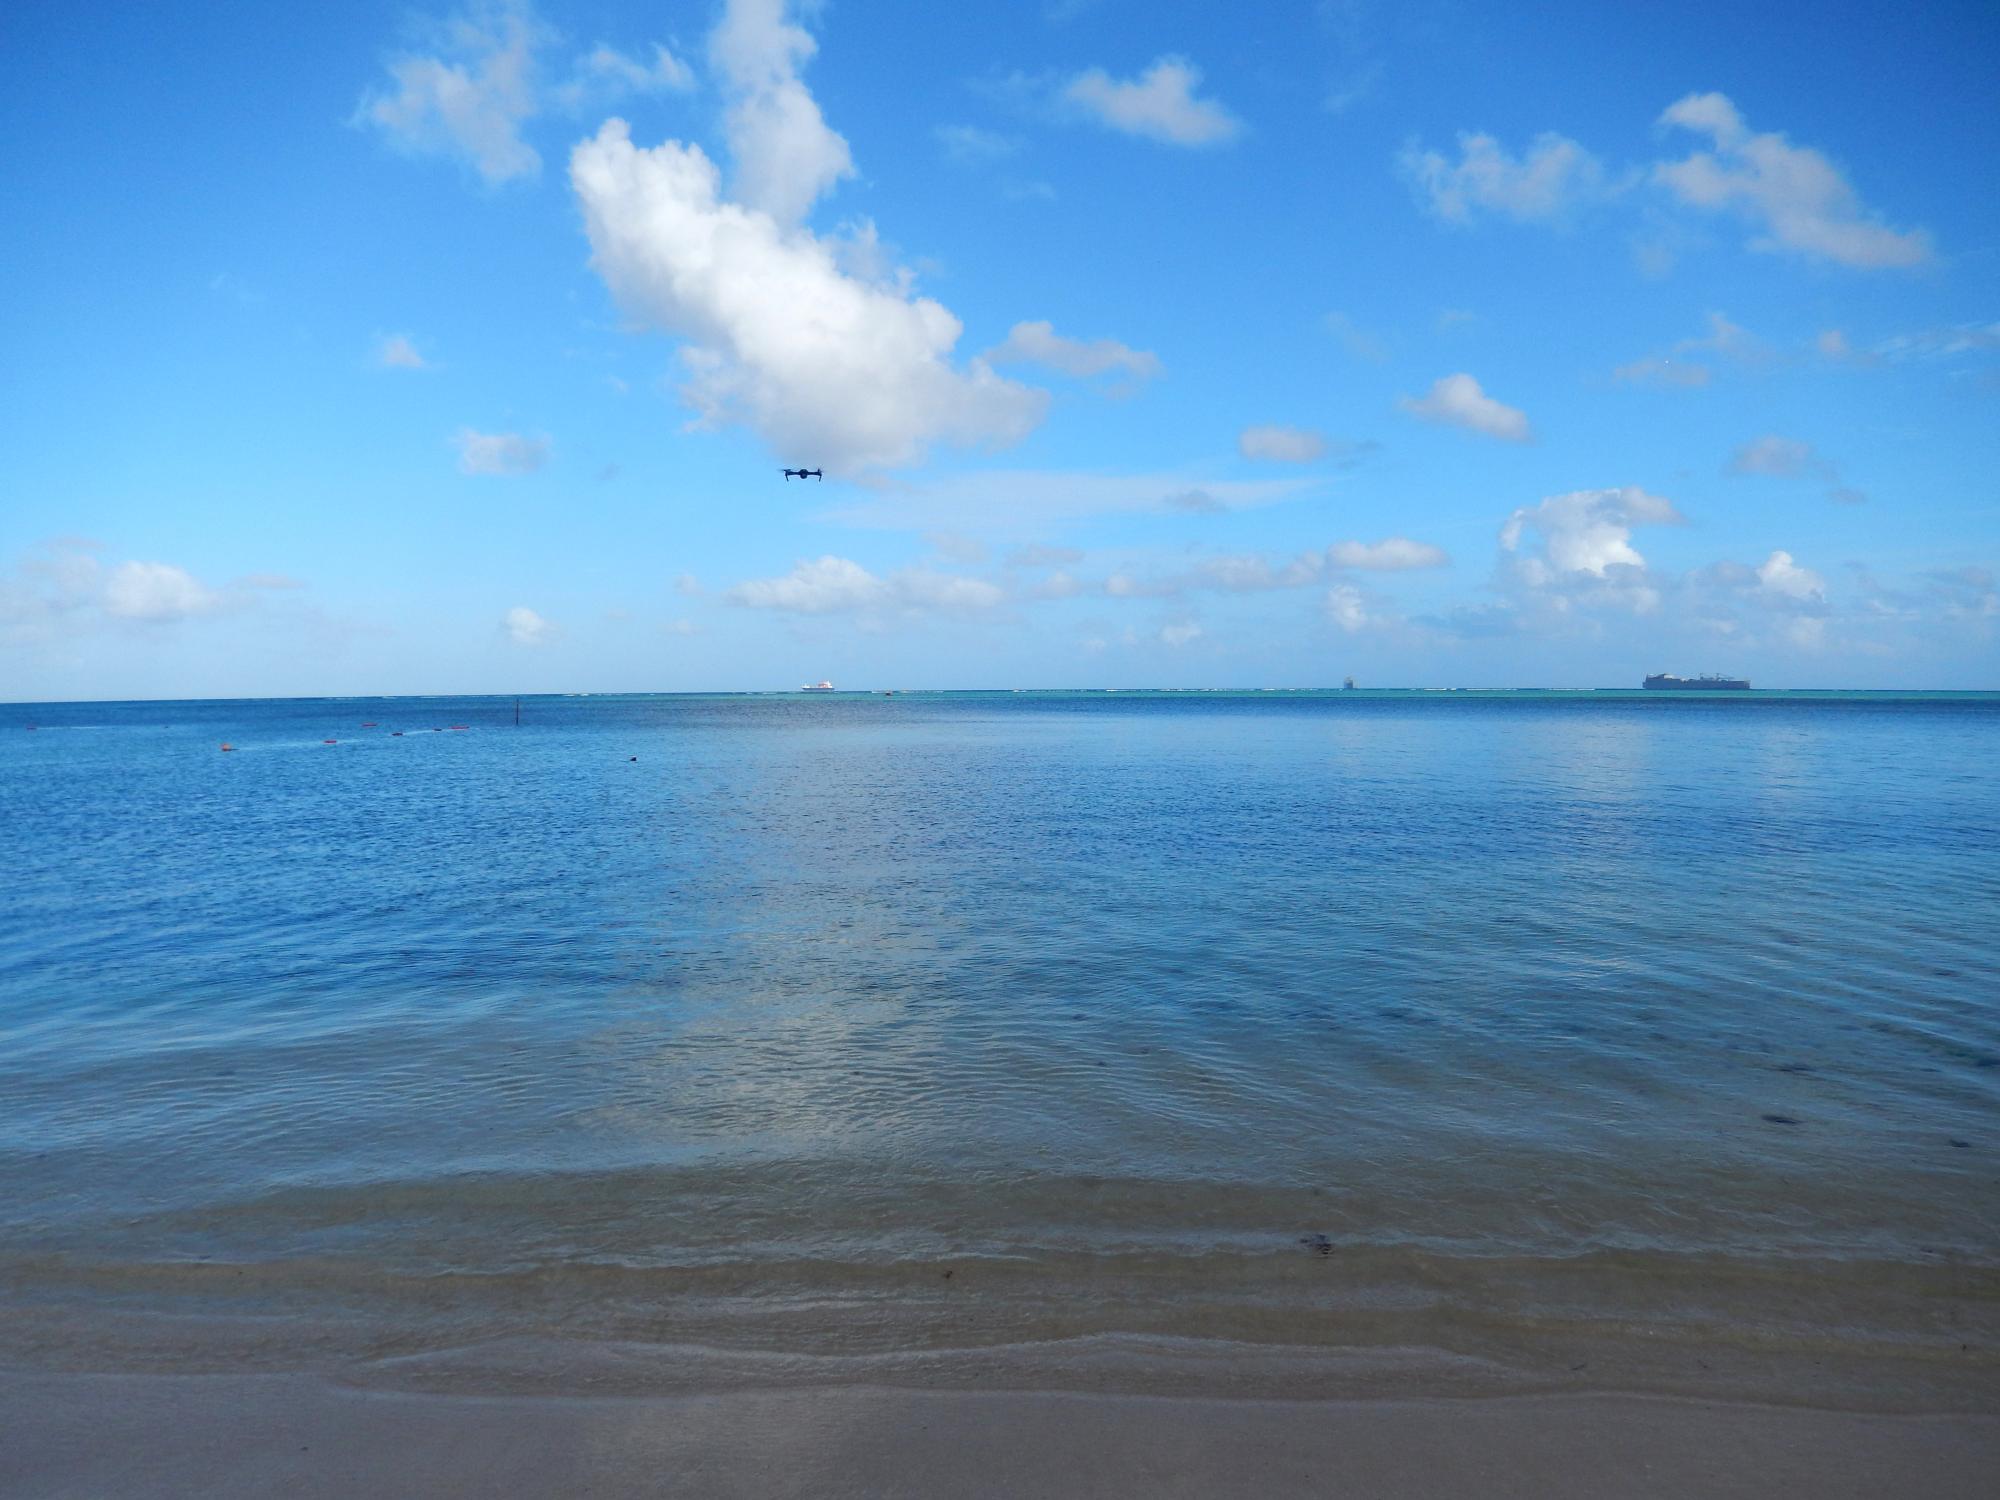 Saipan - Mavic Pro Over Water